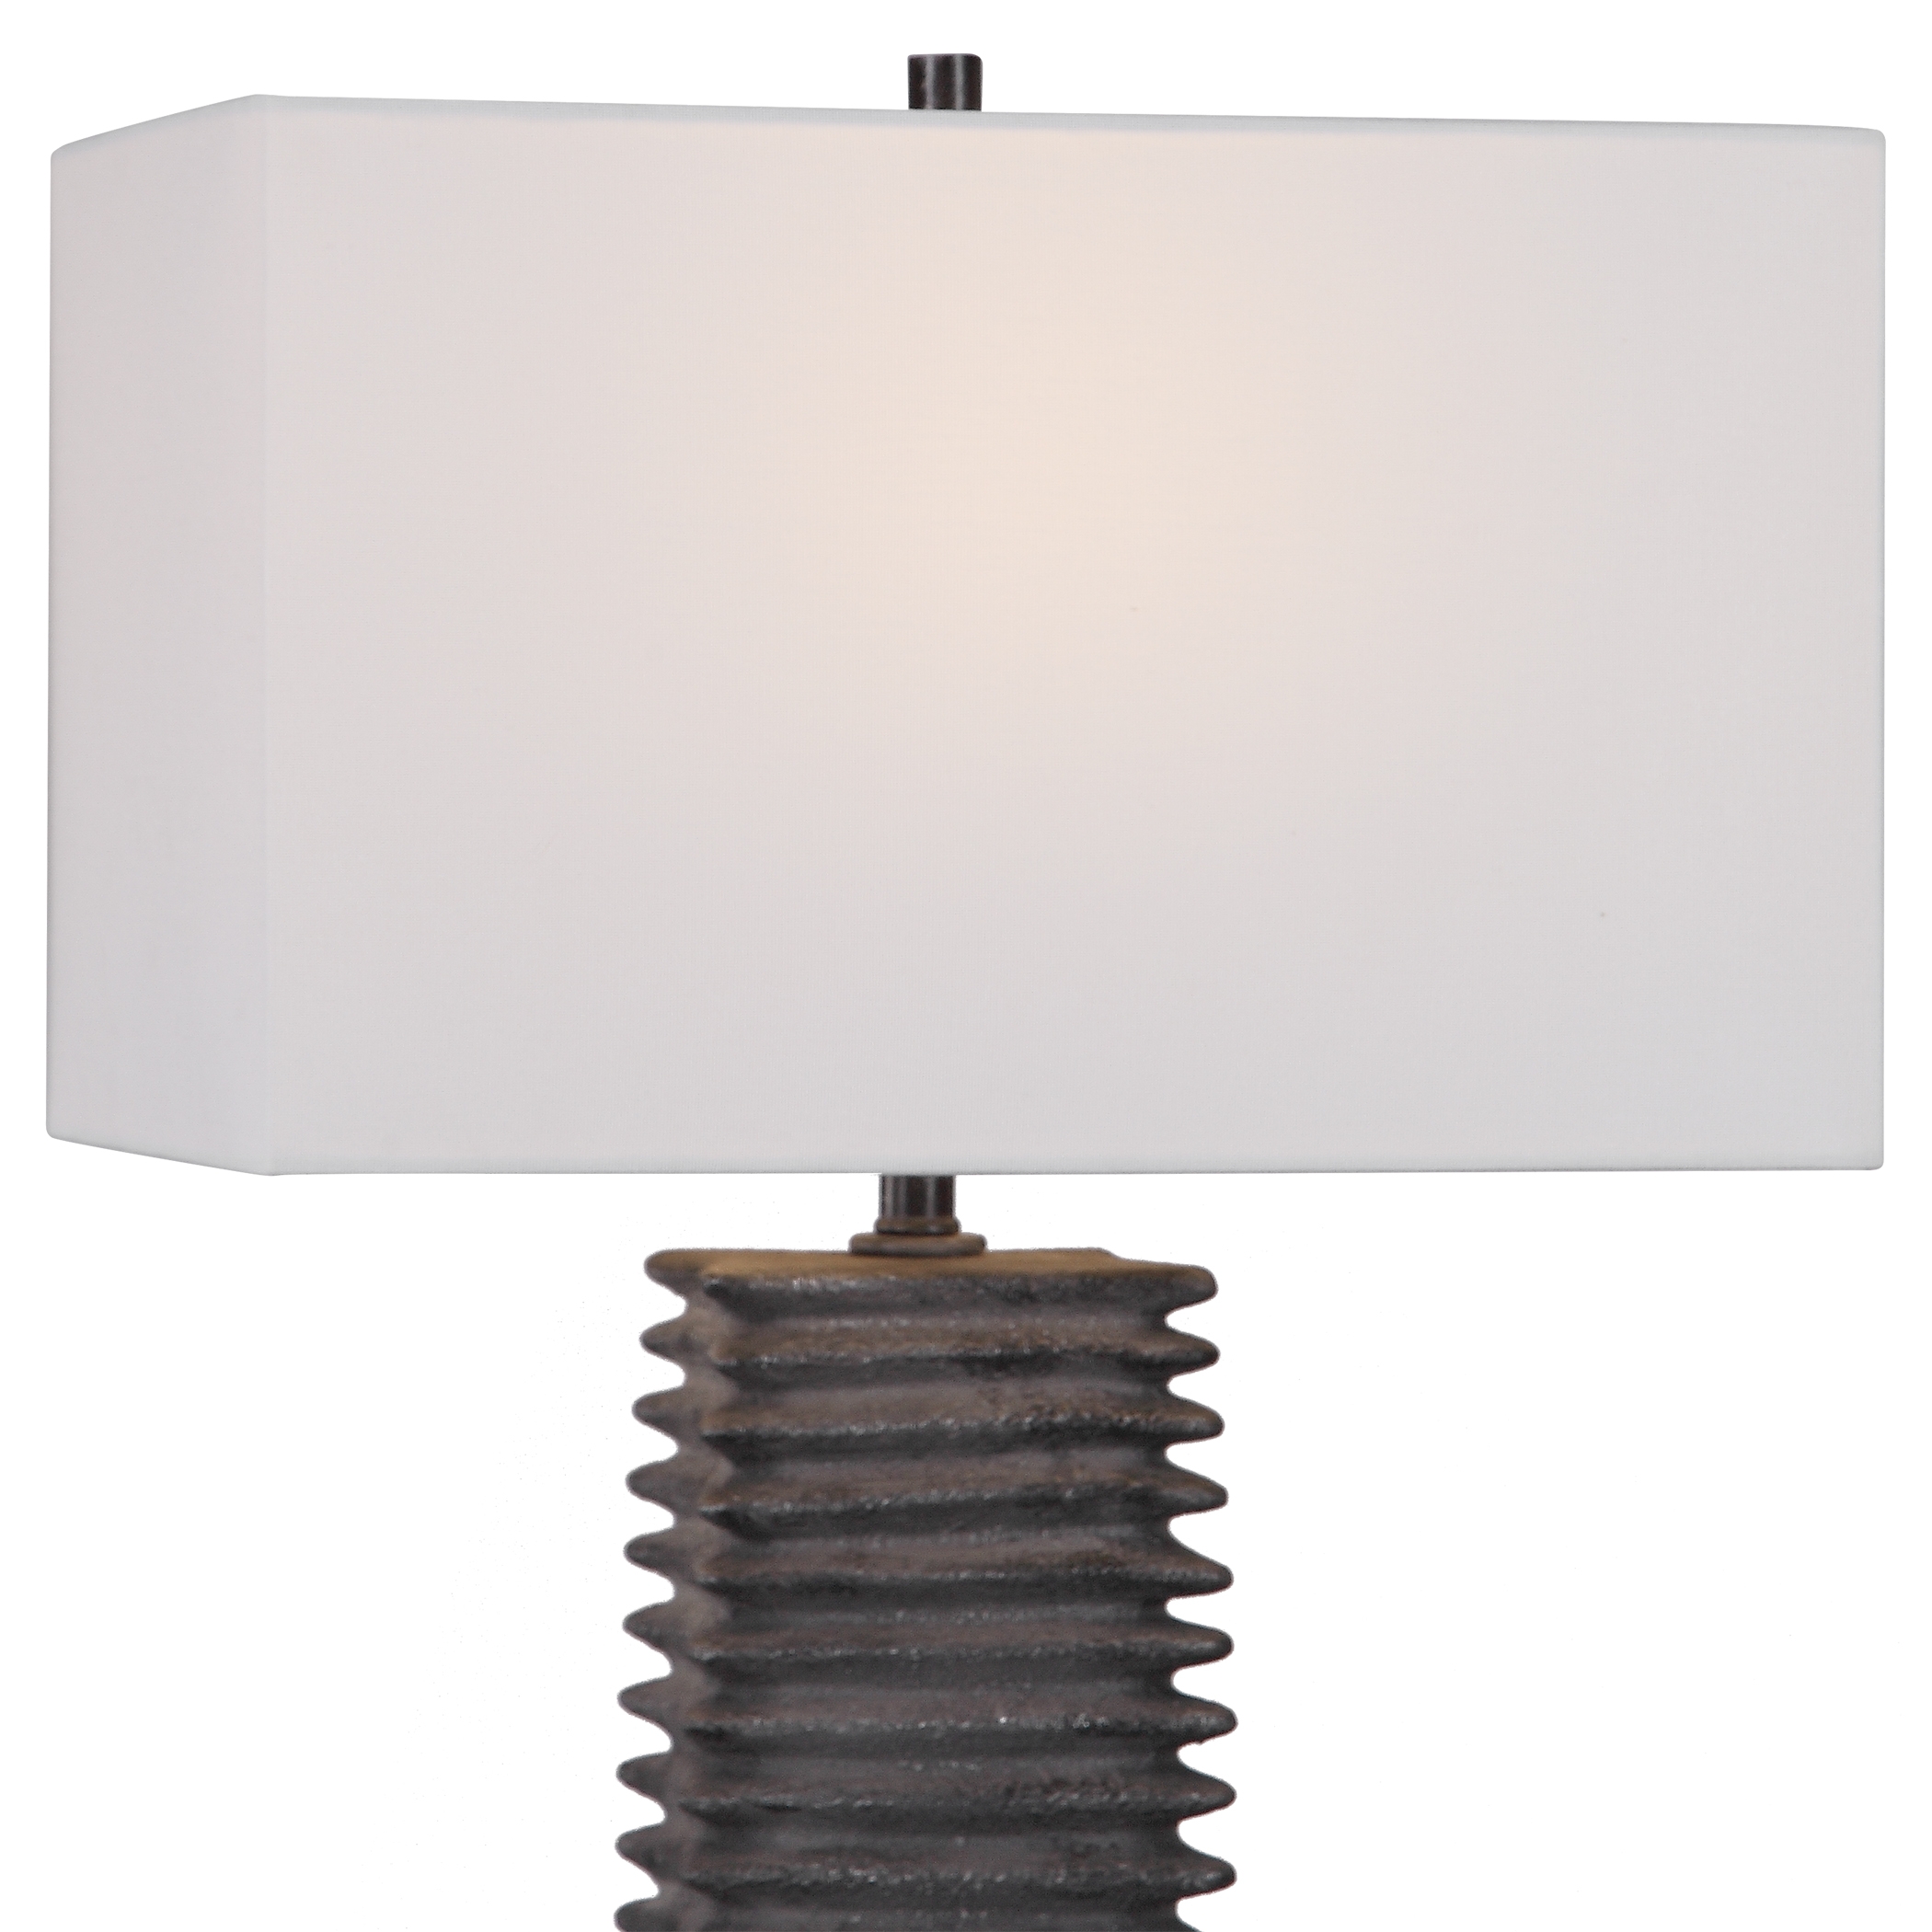 Sanderson Metallic Charcoal Table Lamp - Image 3